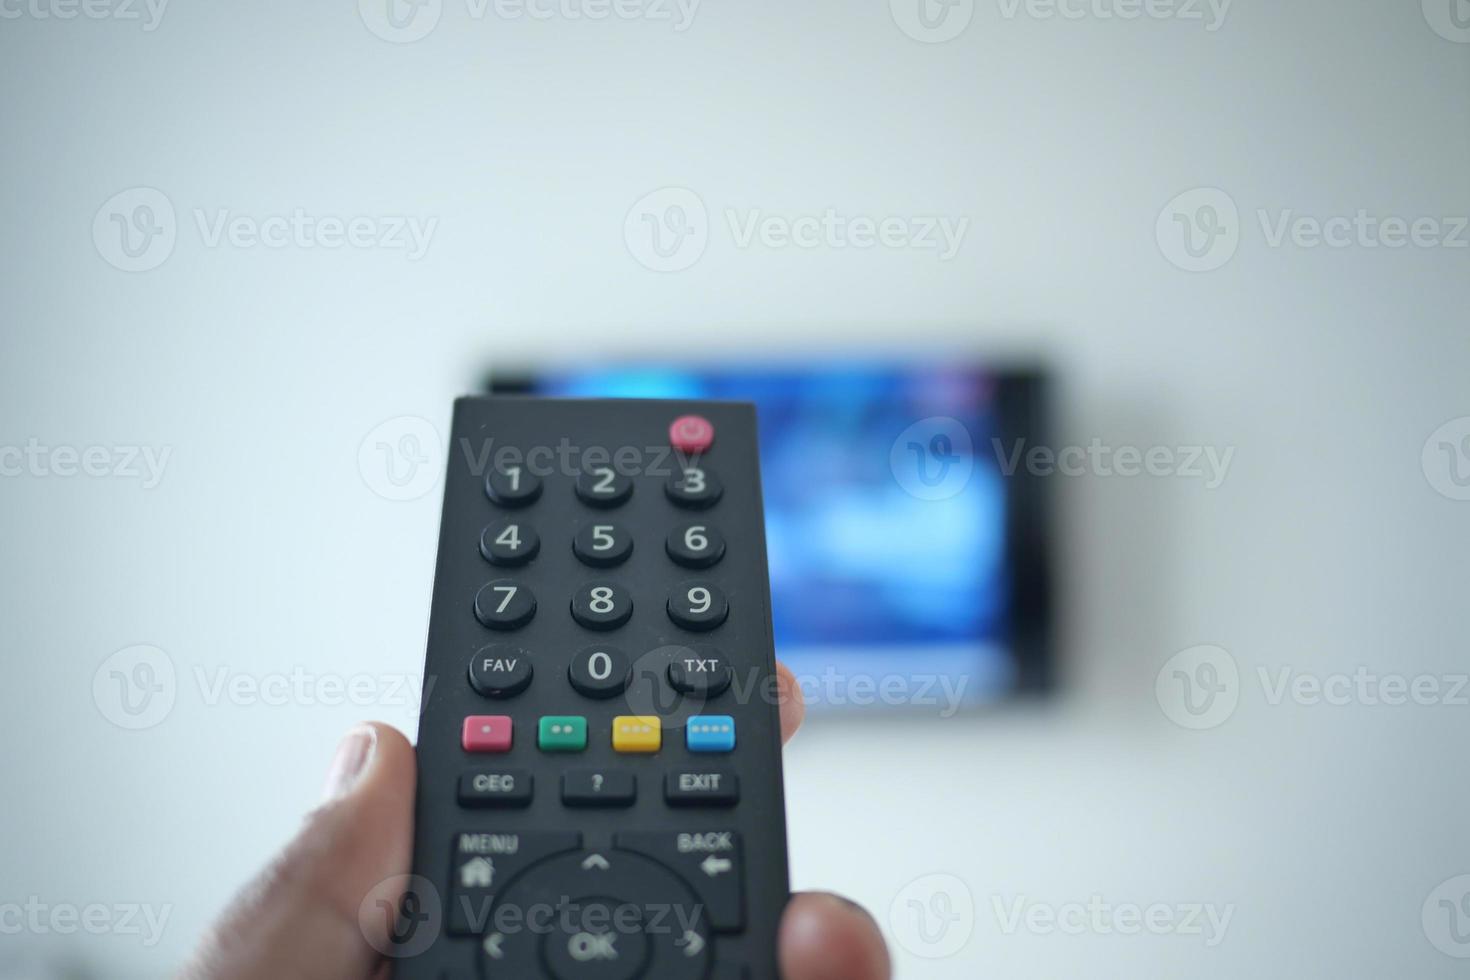 pov shot of man hand holding tv remote. photo